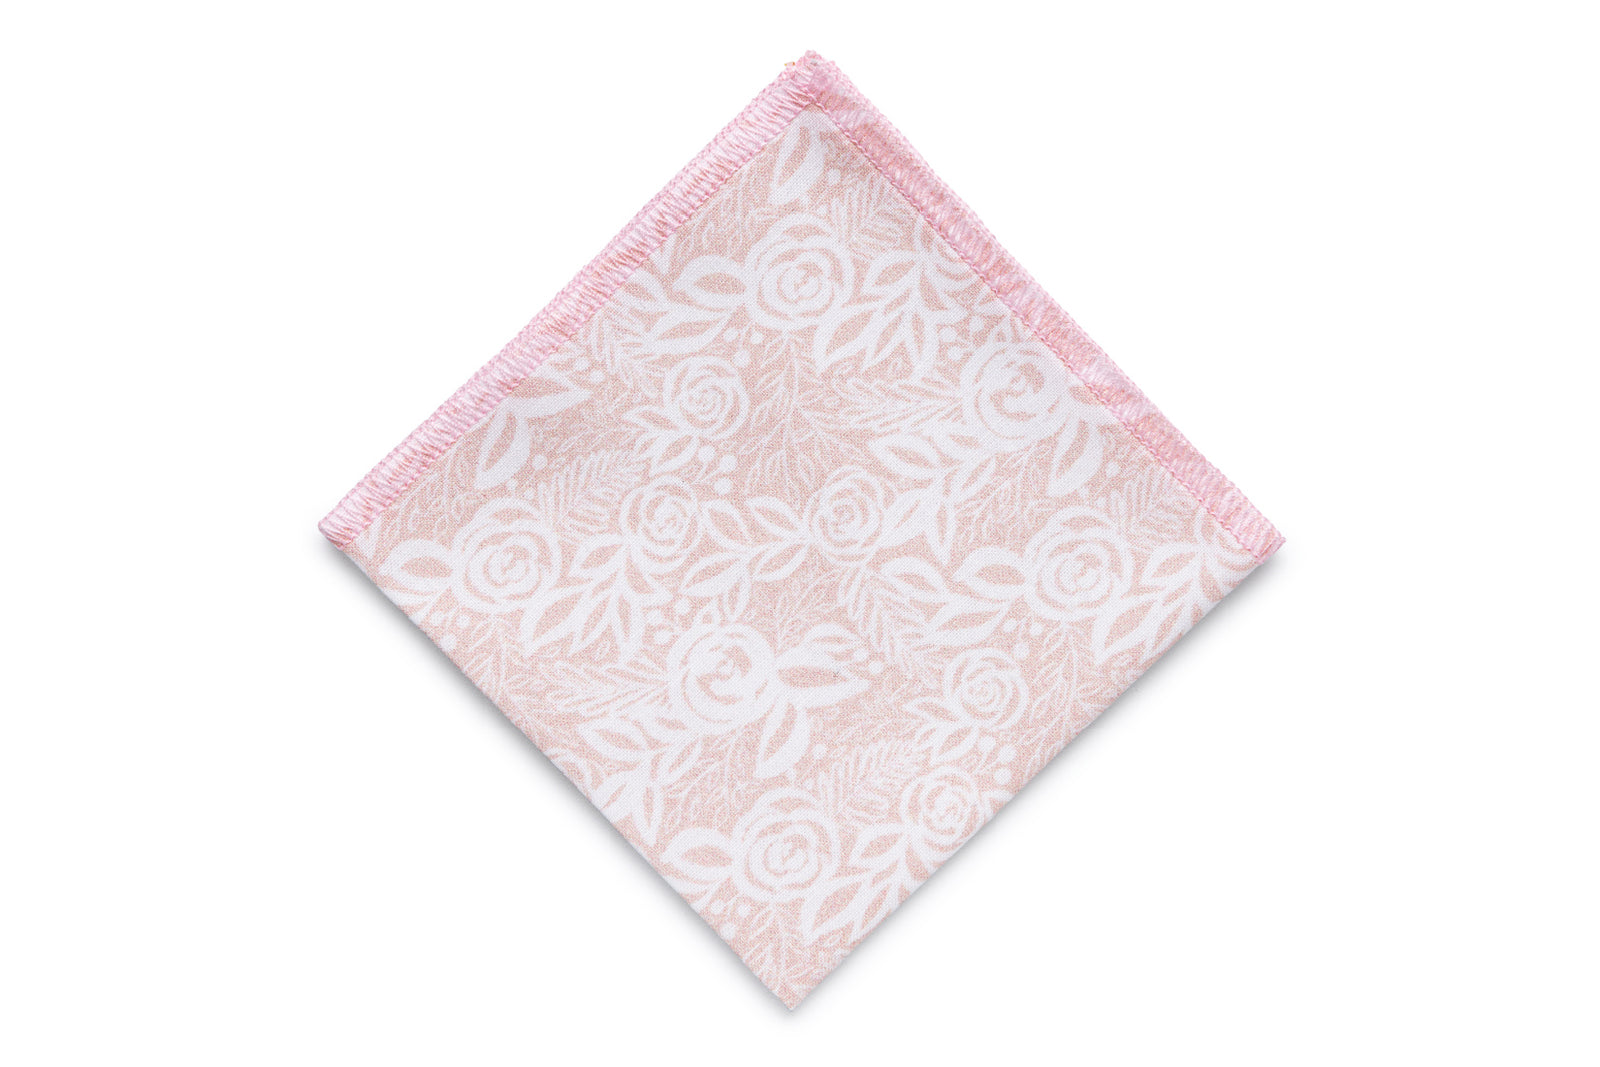 Solid Carmine Pink Pocket Square - PSQ22.9 - The Shirt Bar